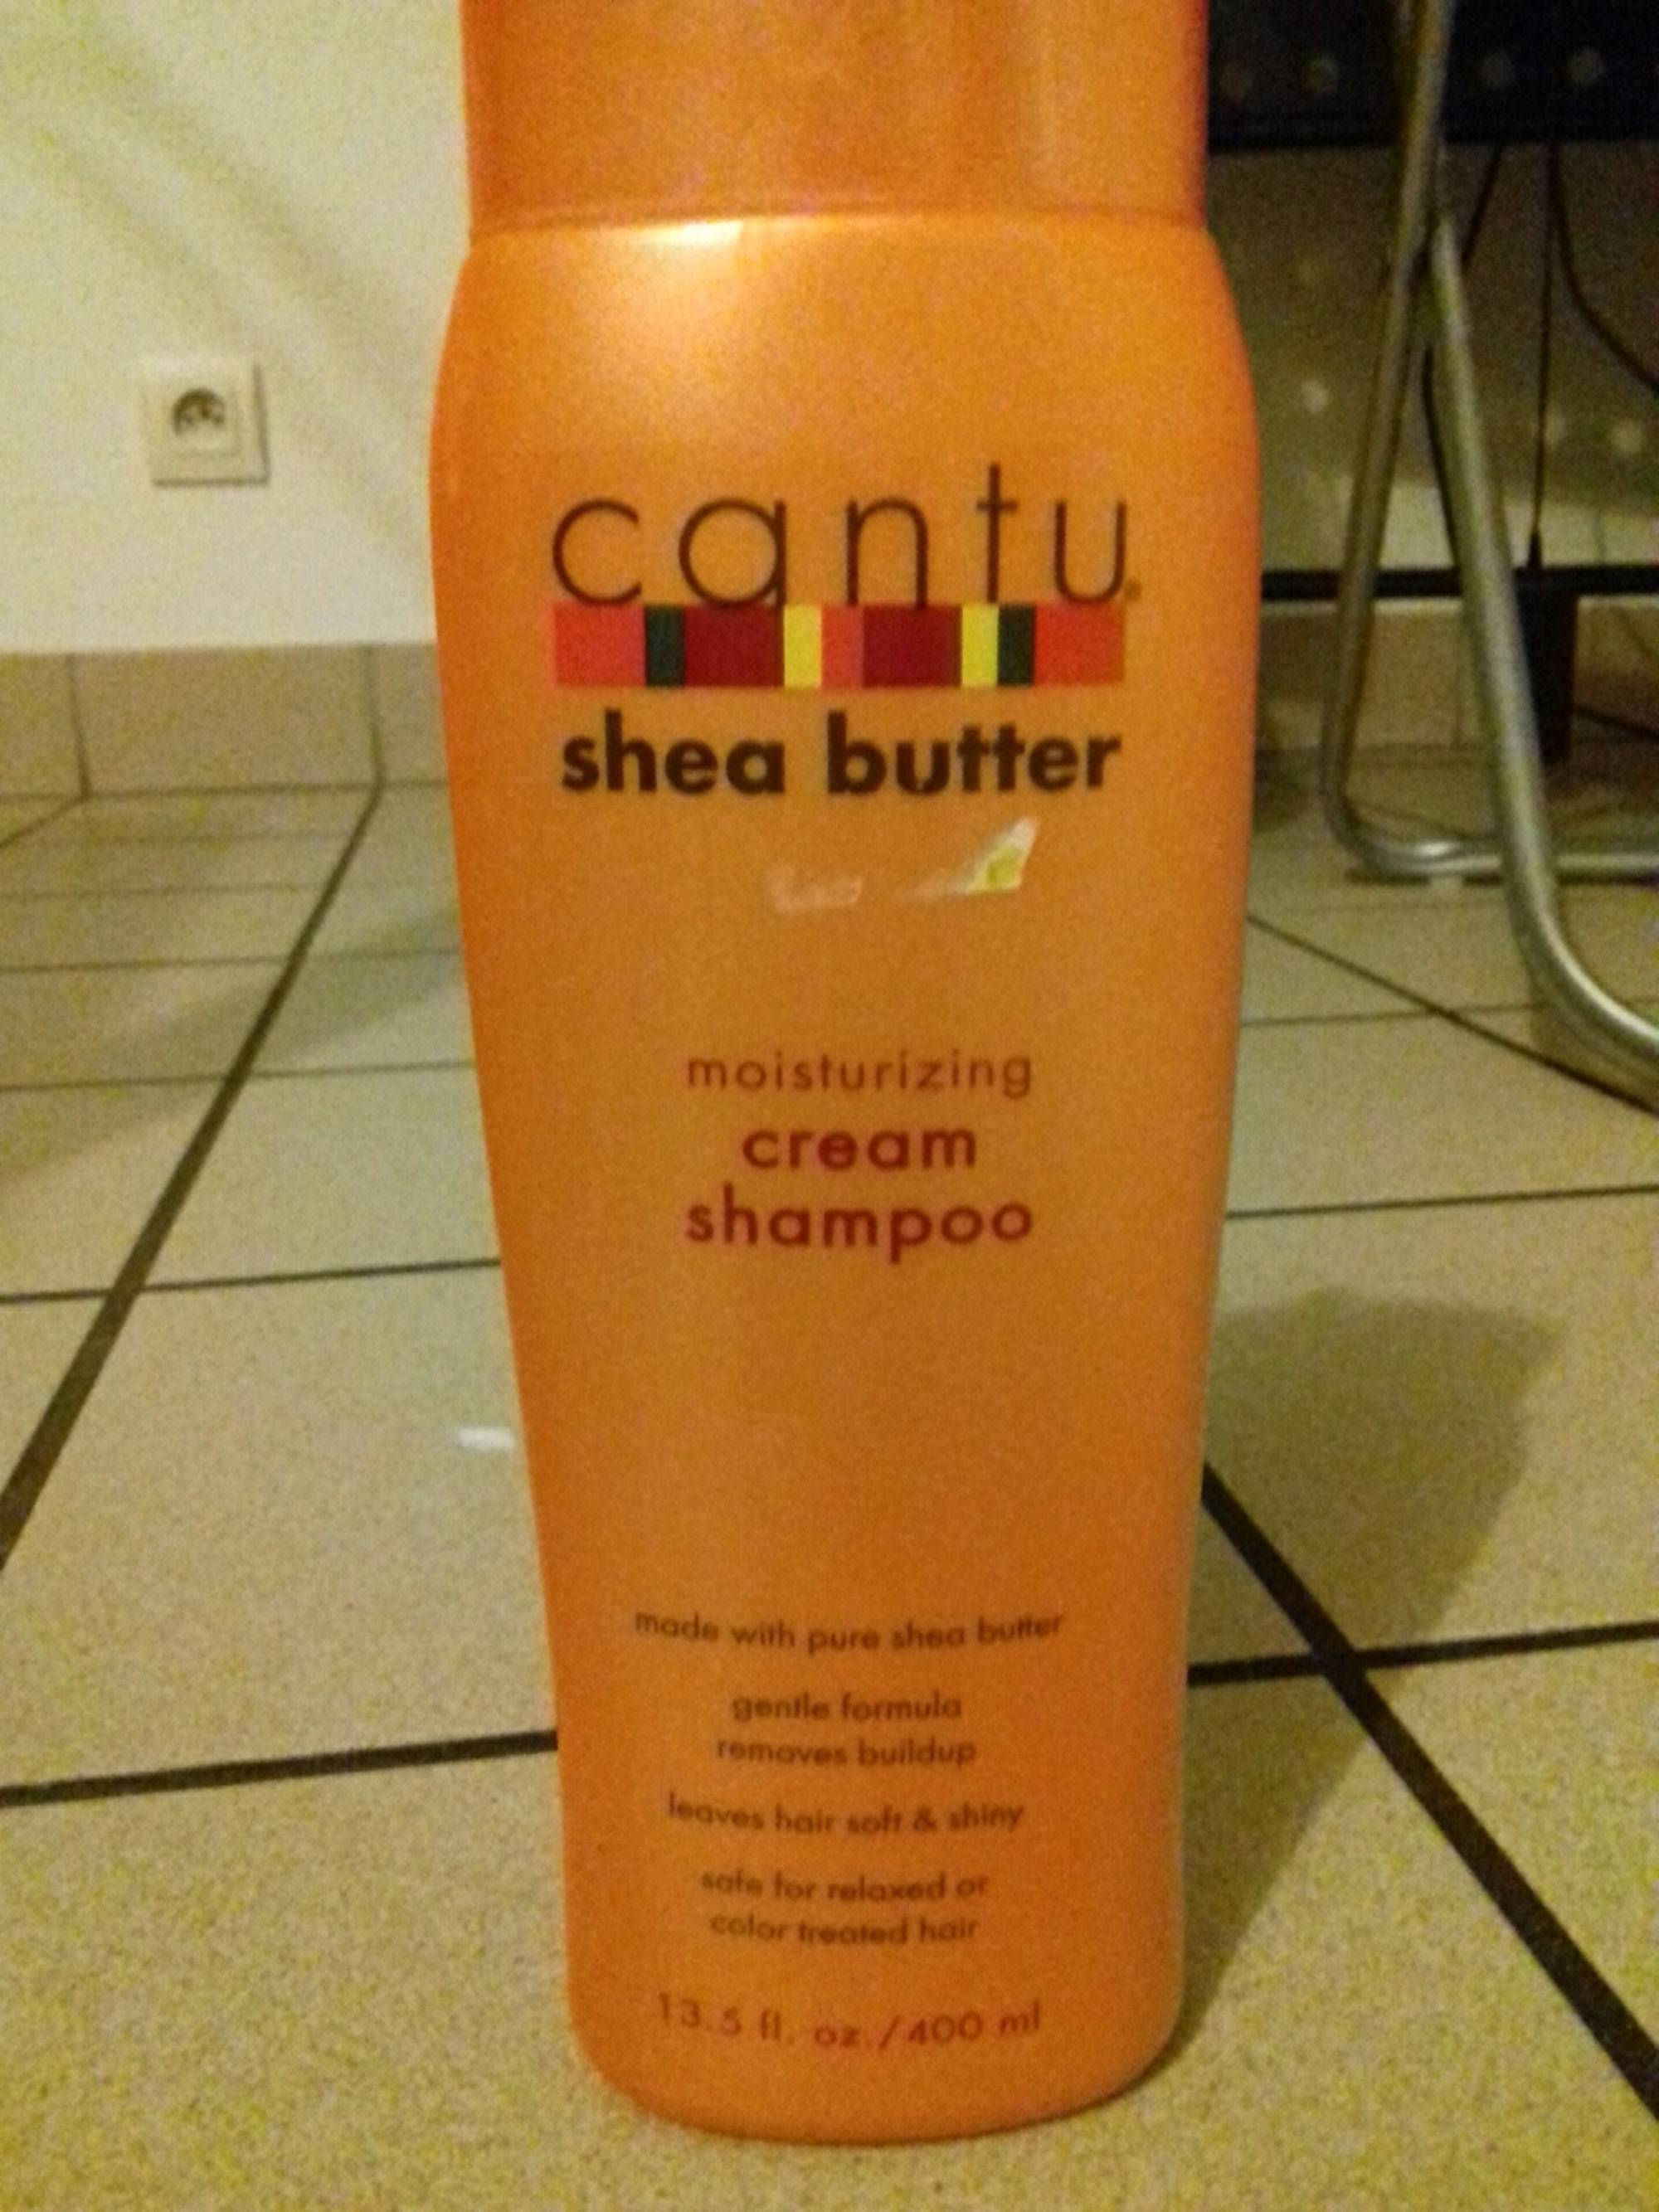 CANTU - Shea butter - Moisturizing cream shampooing